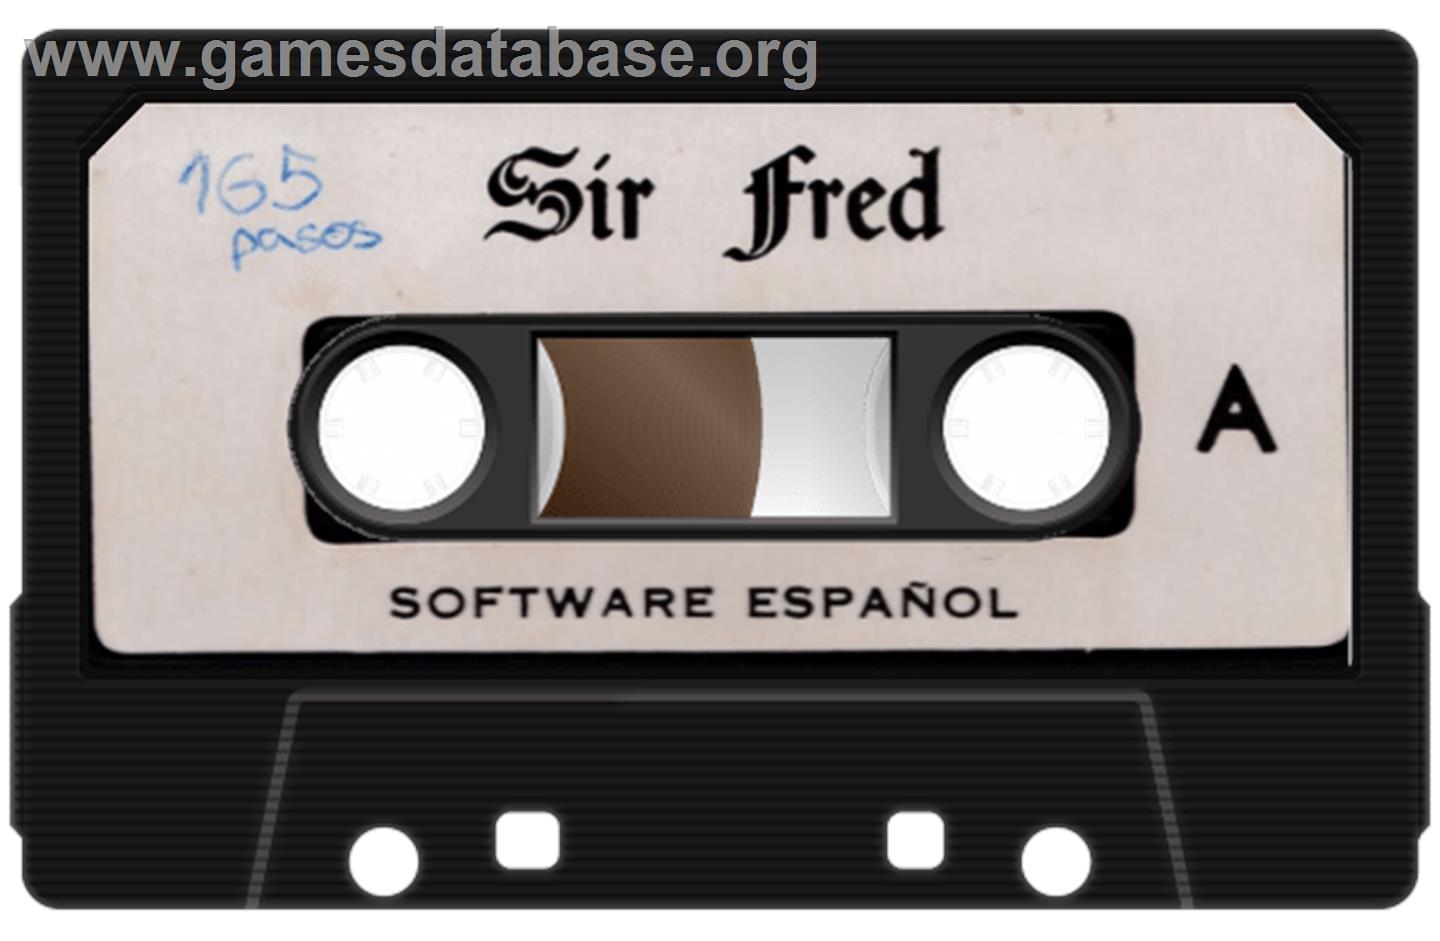 Sir Fred - Amstrad CPC - Artwork - Cartridge